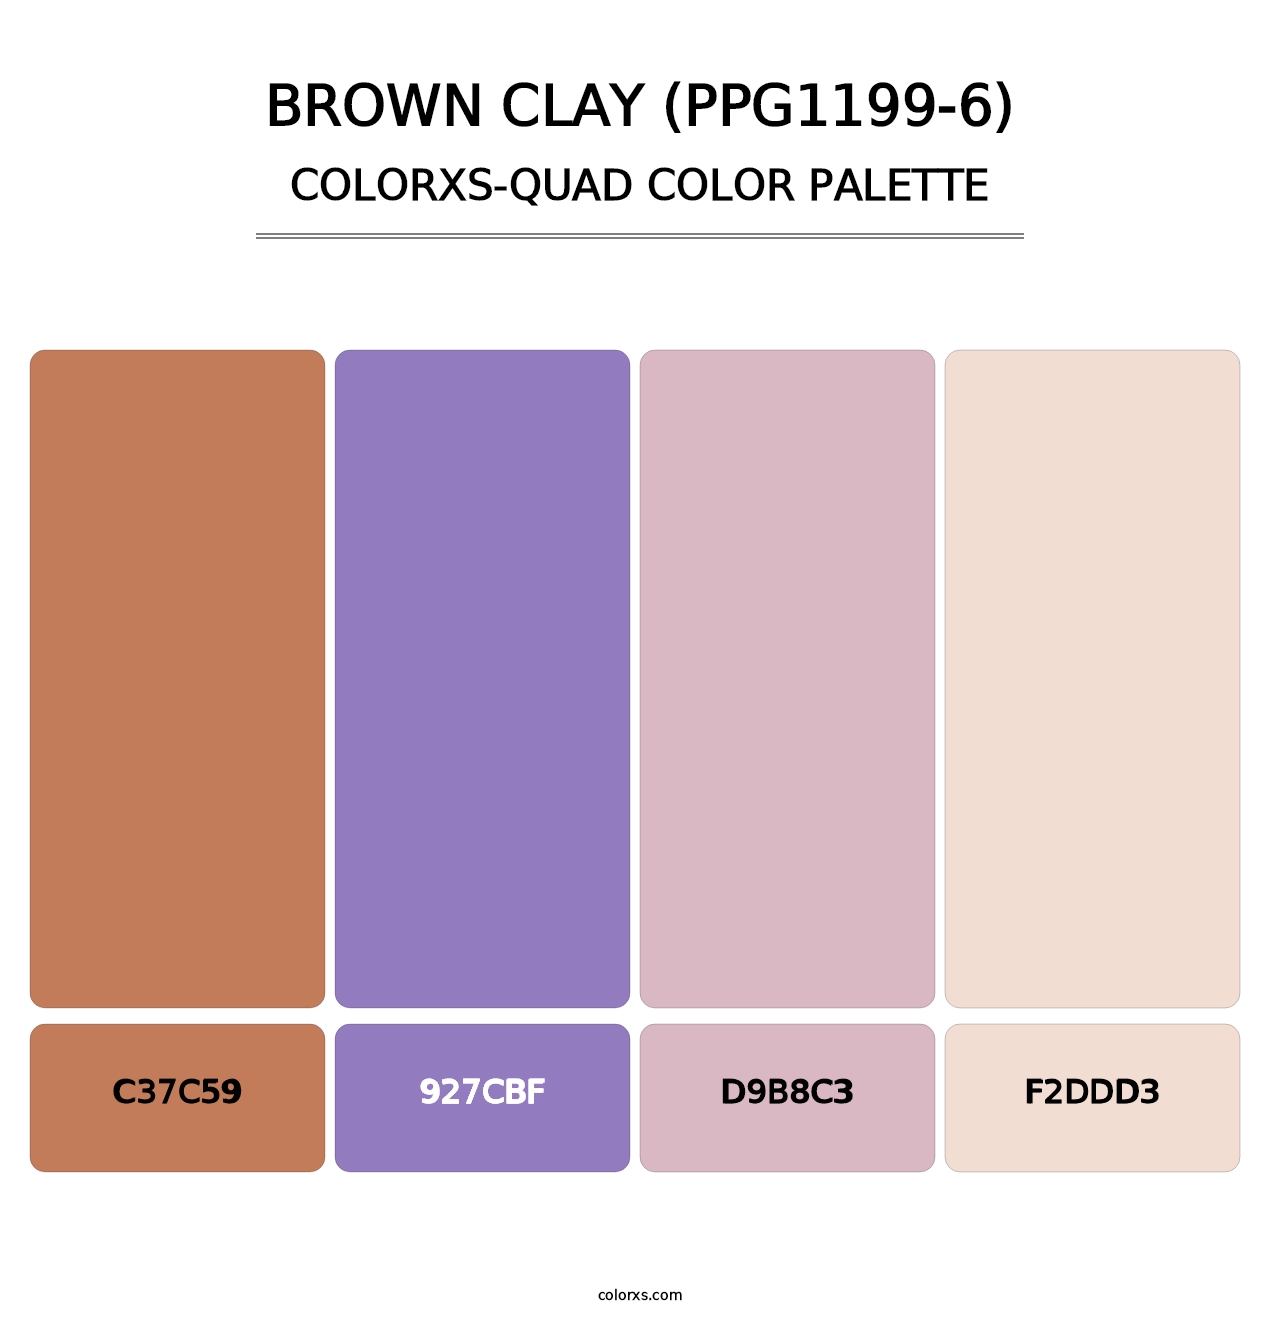 Brown Clay (PPG1199-6) - Colorxs Quad Palette